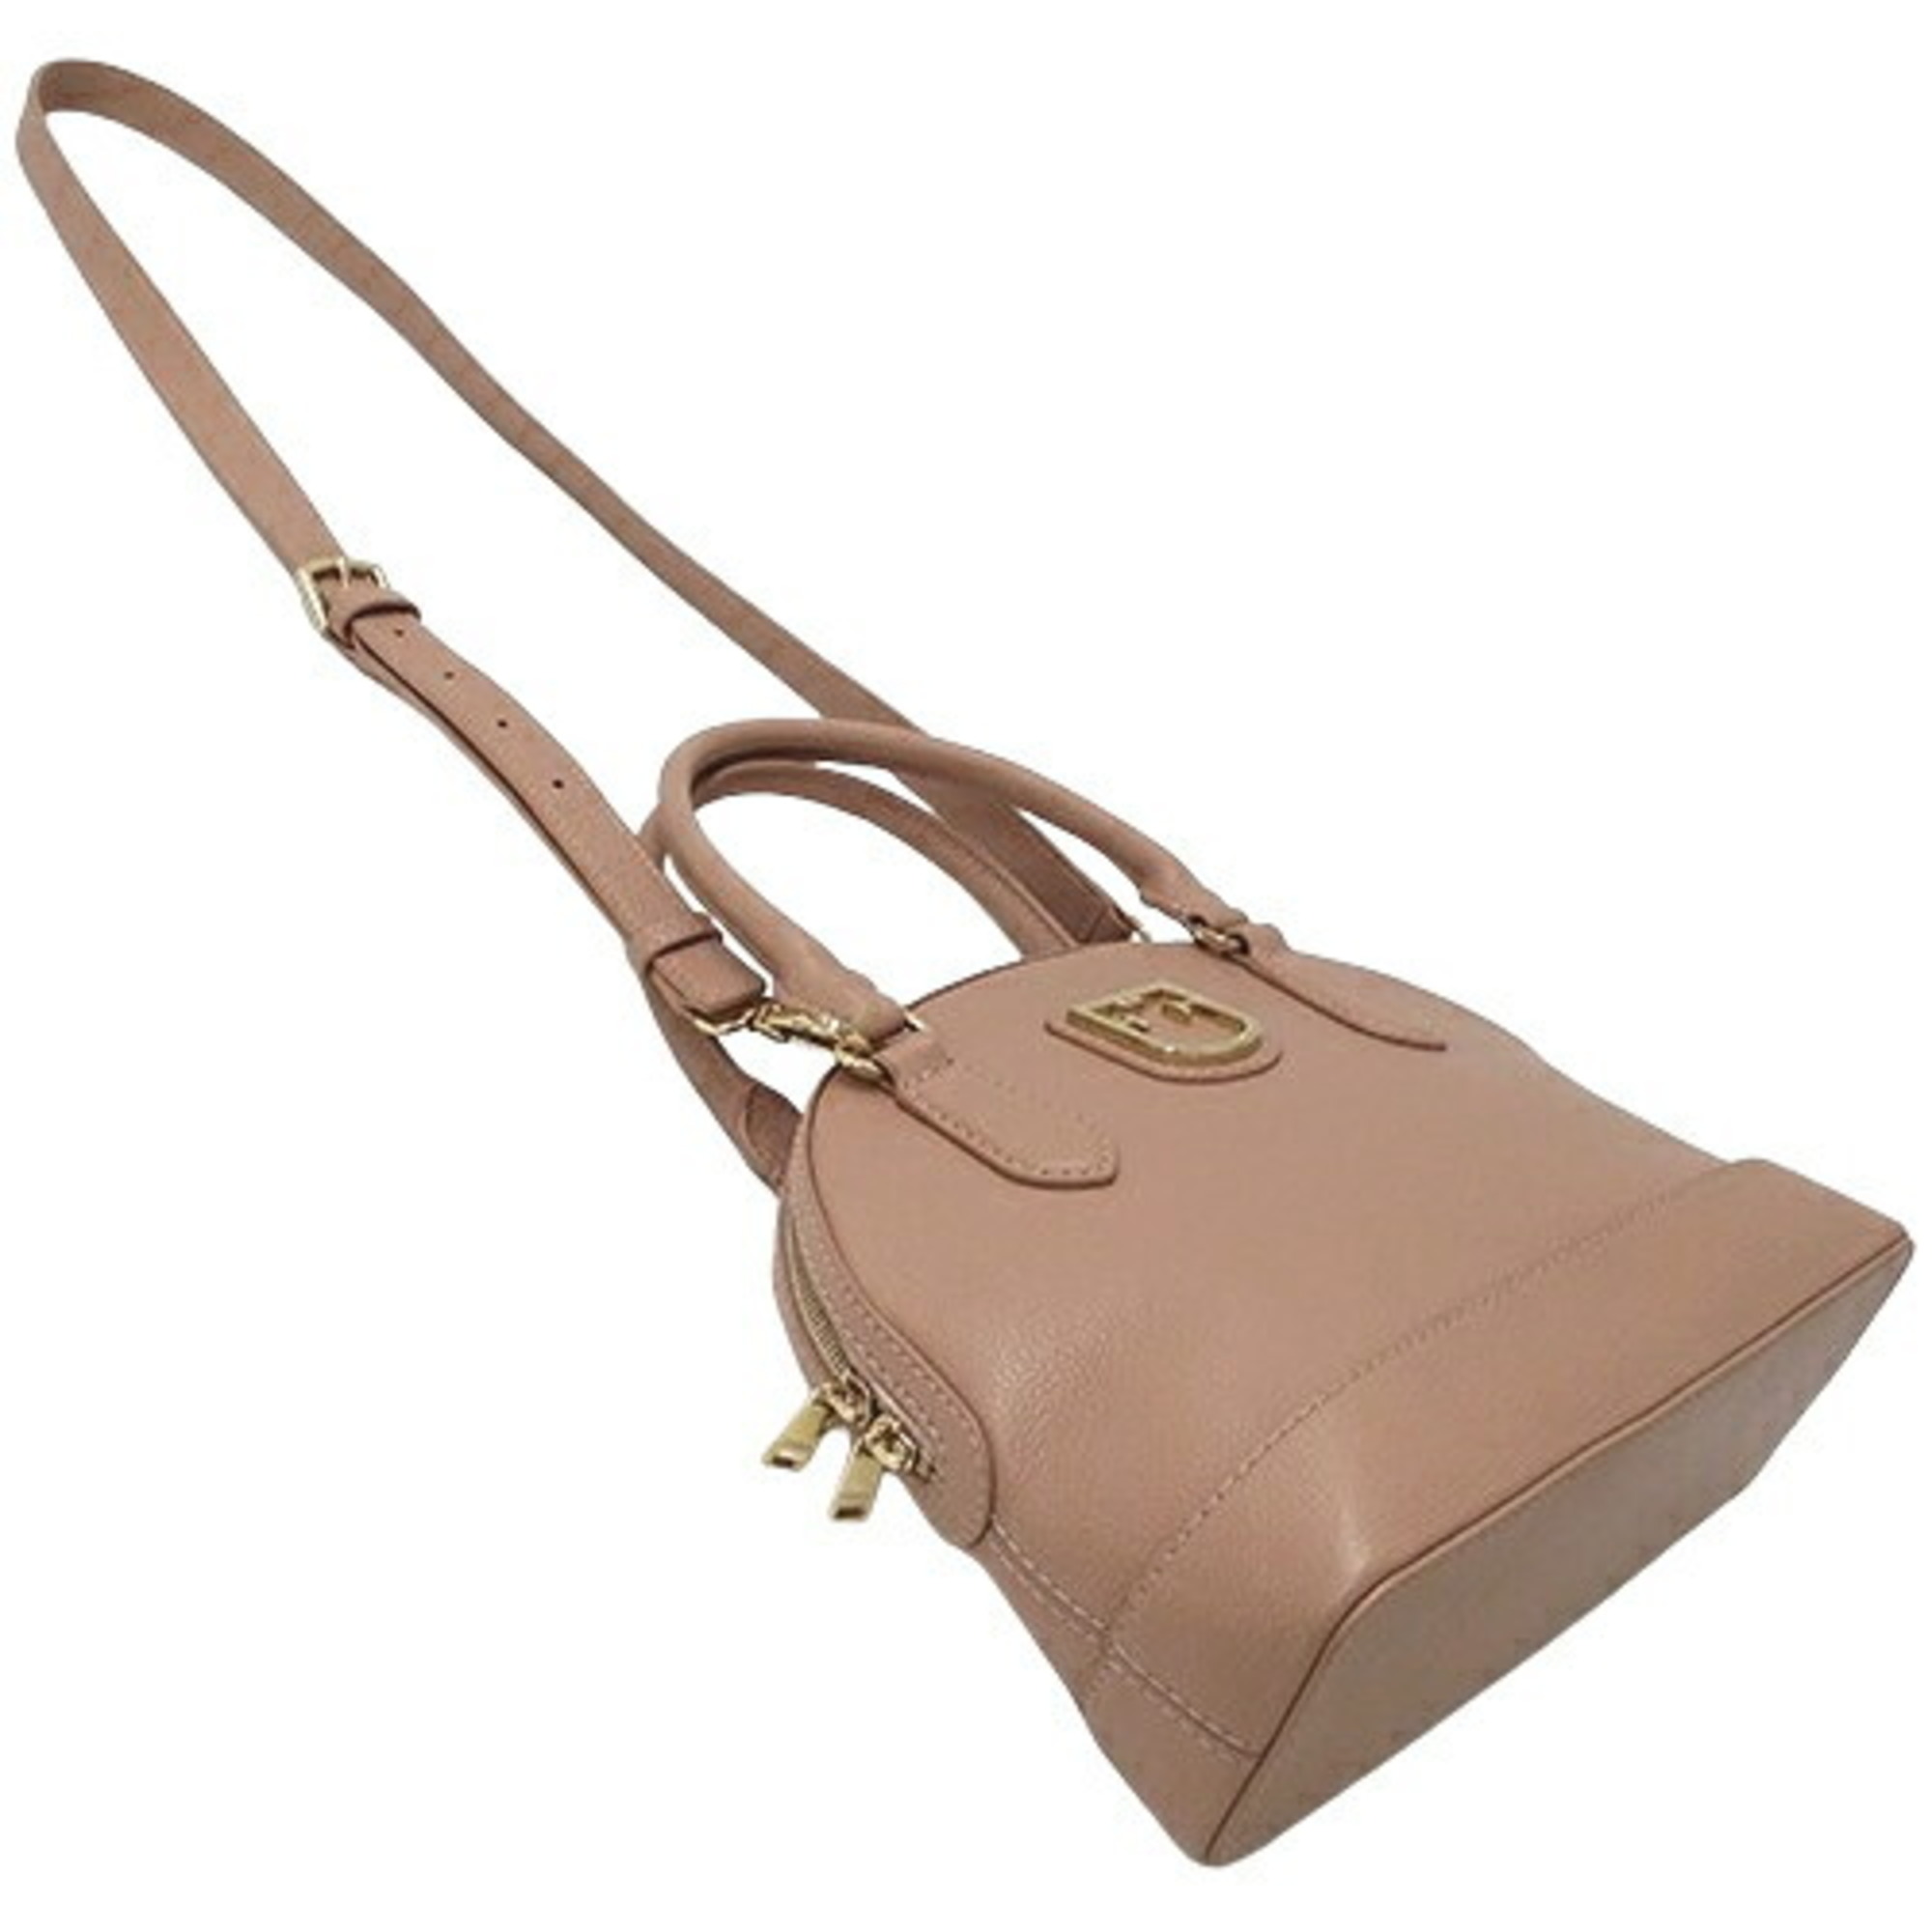 Furla Bag Women's Brand Handbag Shoulder 2way Leather Fantastica Pink Compact